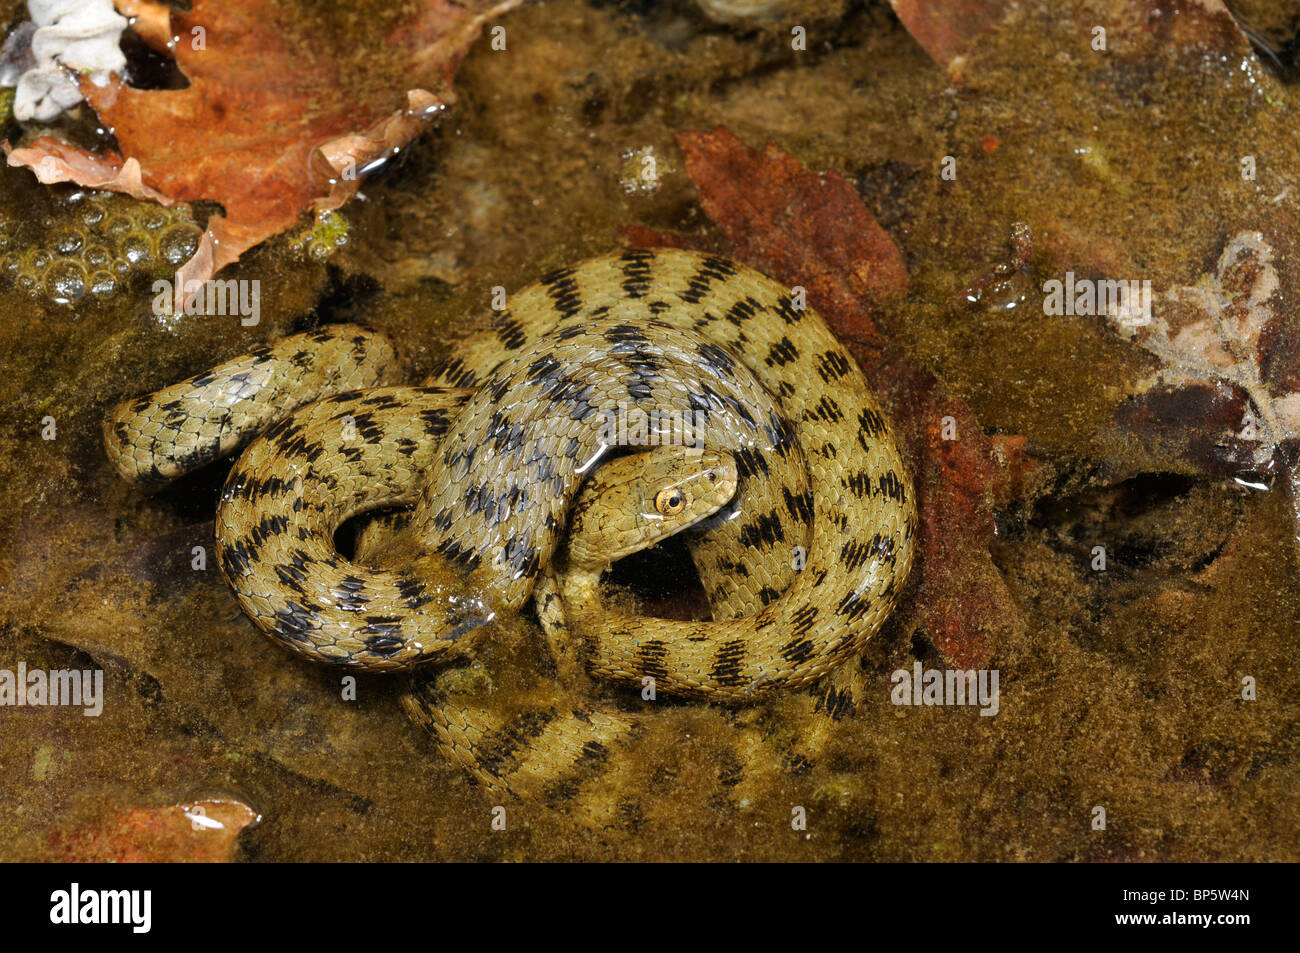 dice snake (Natrix tessellata), in shallow water, Greece, Creta, Greece Stock Photo